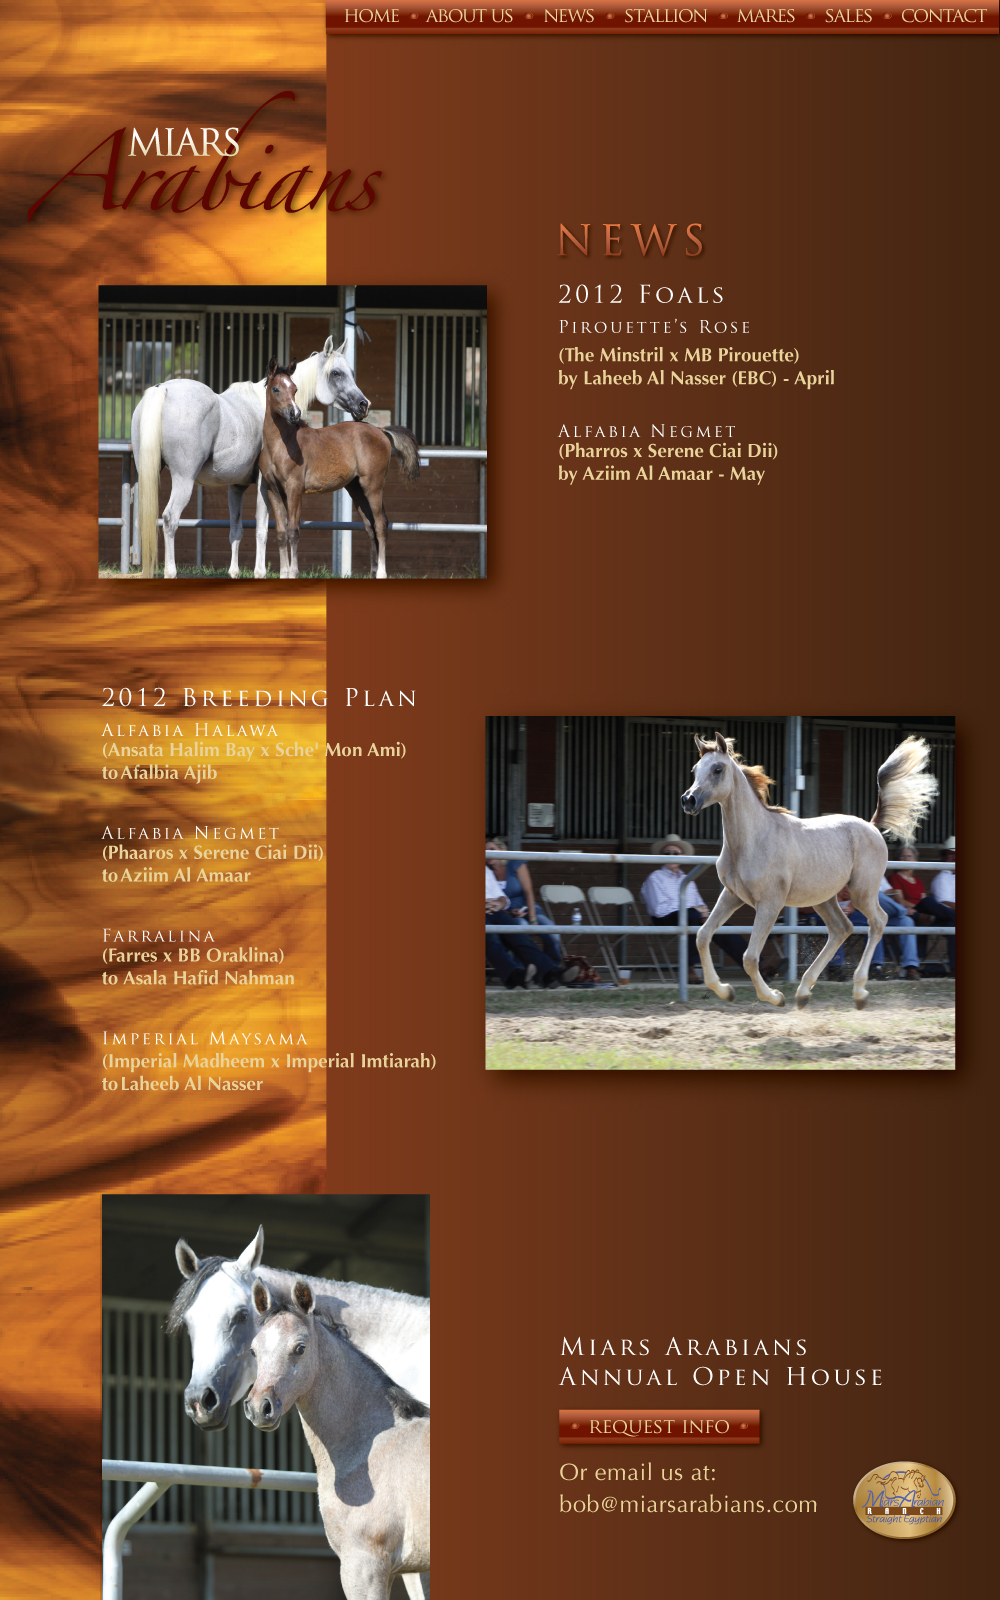 Miars Arabians News 2011 Foals - 2012 Breeding Plans - Miars Arabians Annual Open House